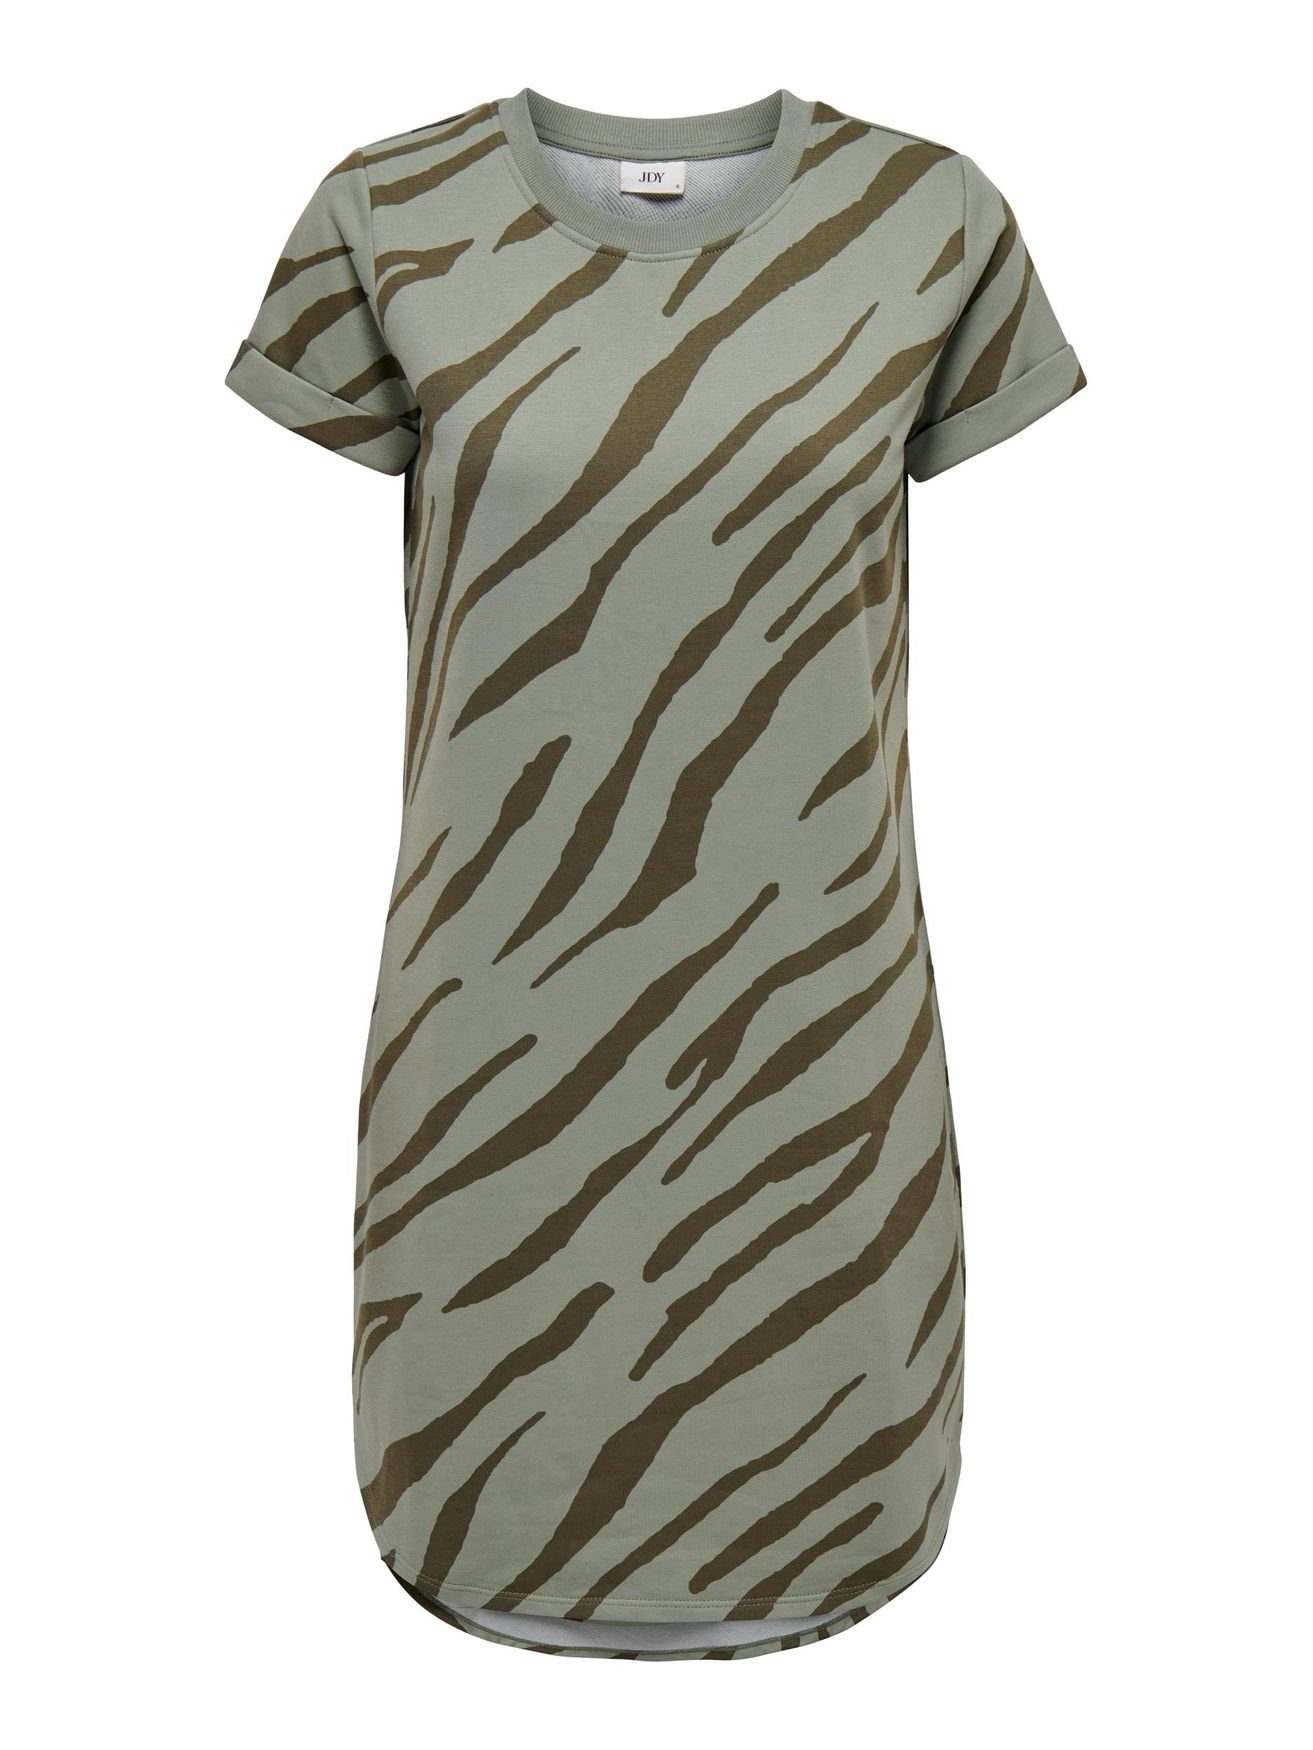 JACQUELINE de YONG Shirtkleid Kurzes T-Shirt Kleid Knielang Gestreift JDYIVY (knielang) 4989 in Olive